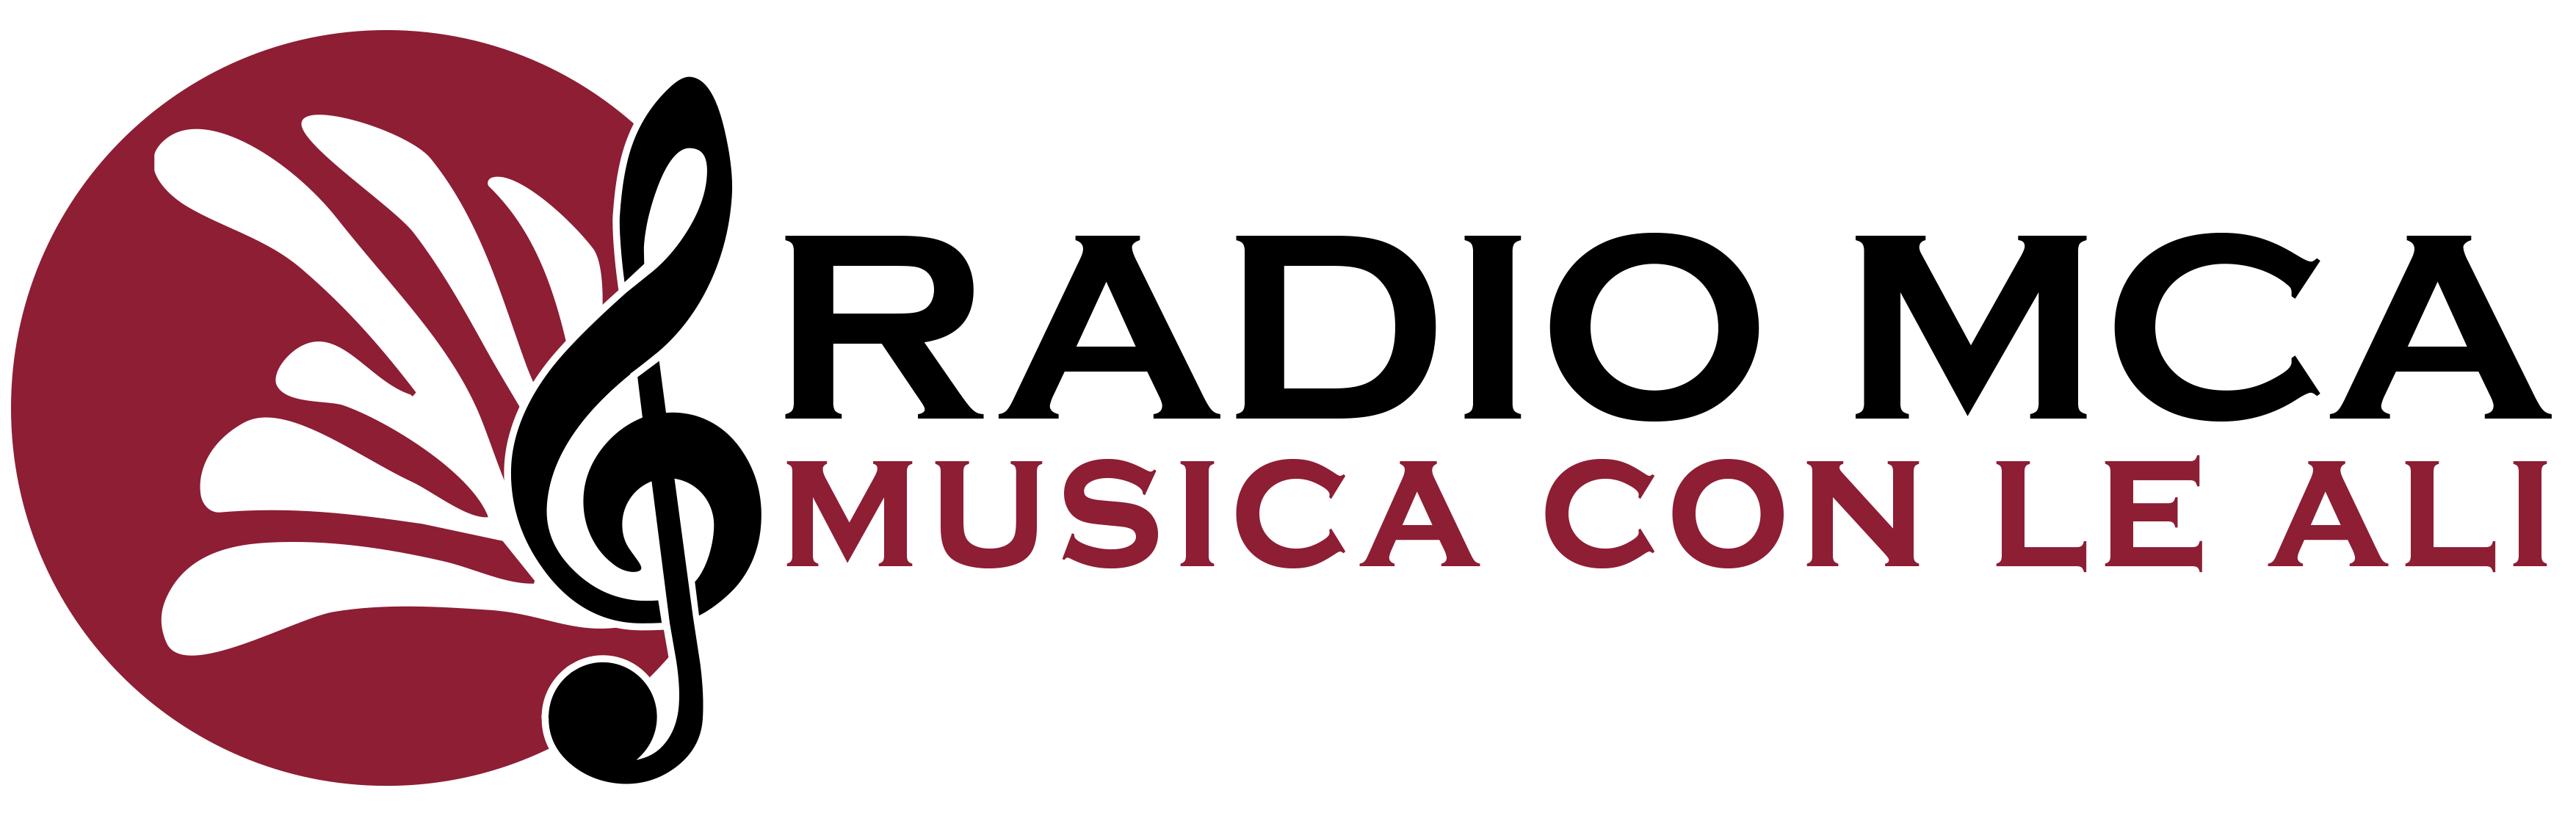 RadioMCA logonuovo PNG